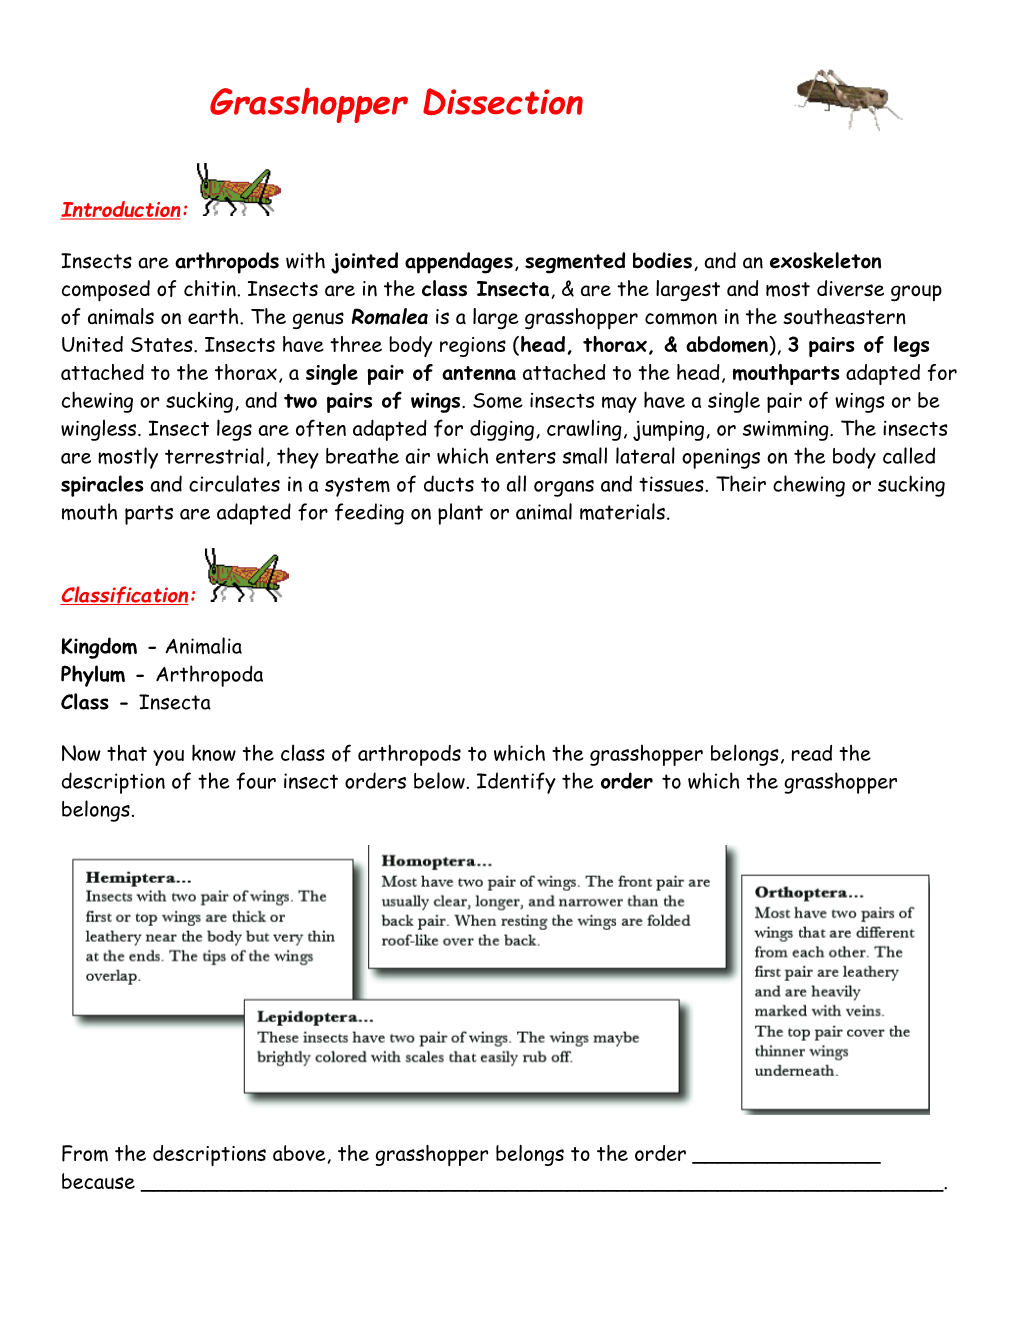 Kingdom - Animalia Phylum - Arthropoda Class - Insecta